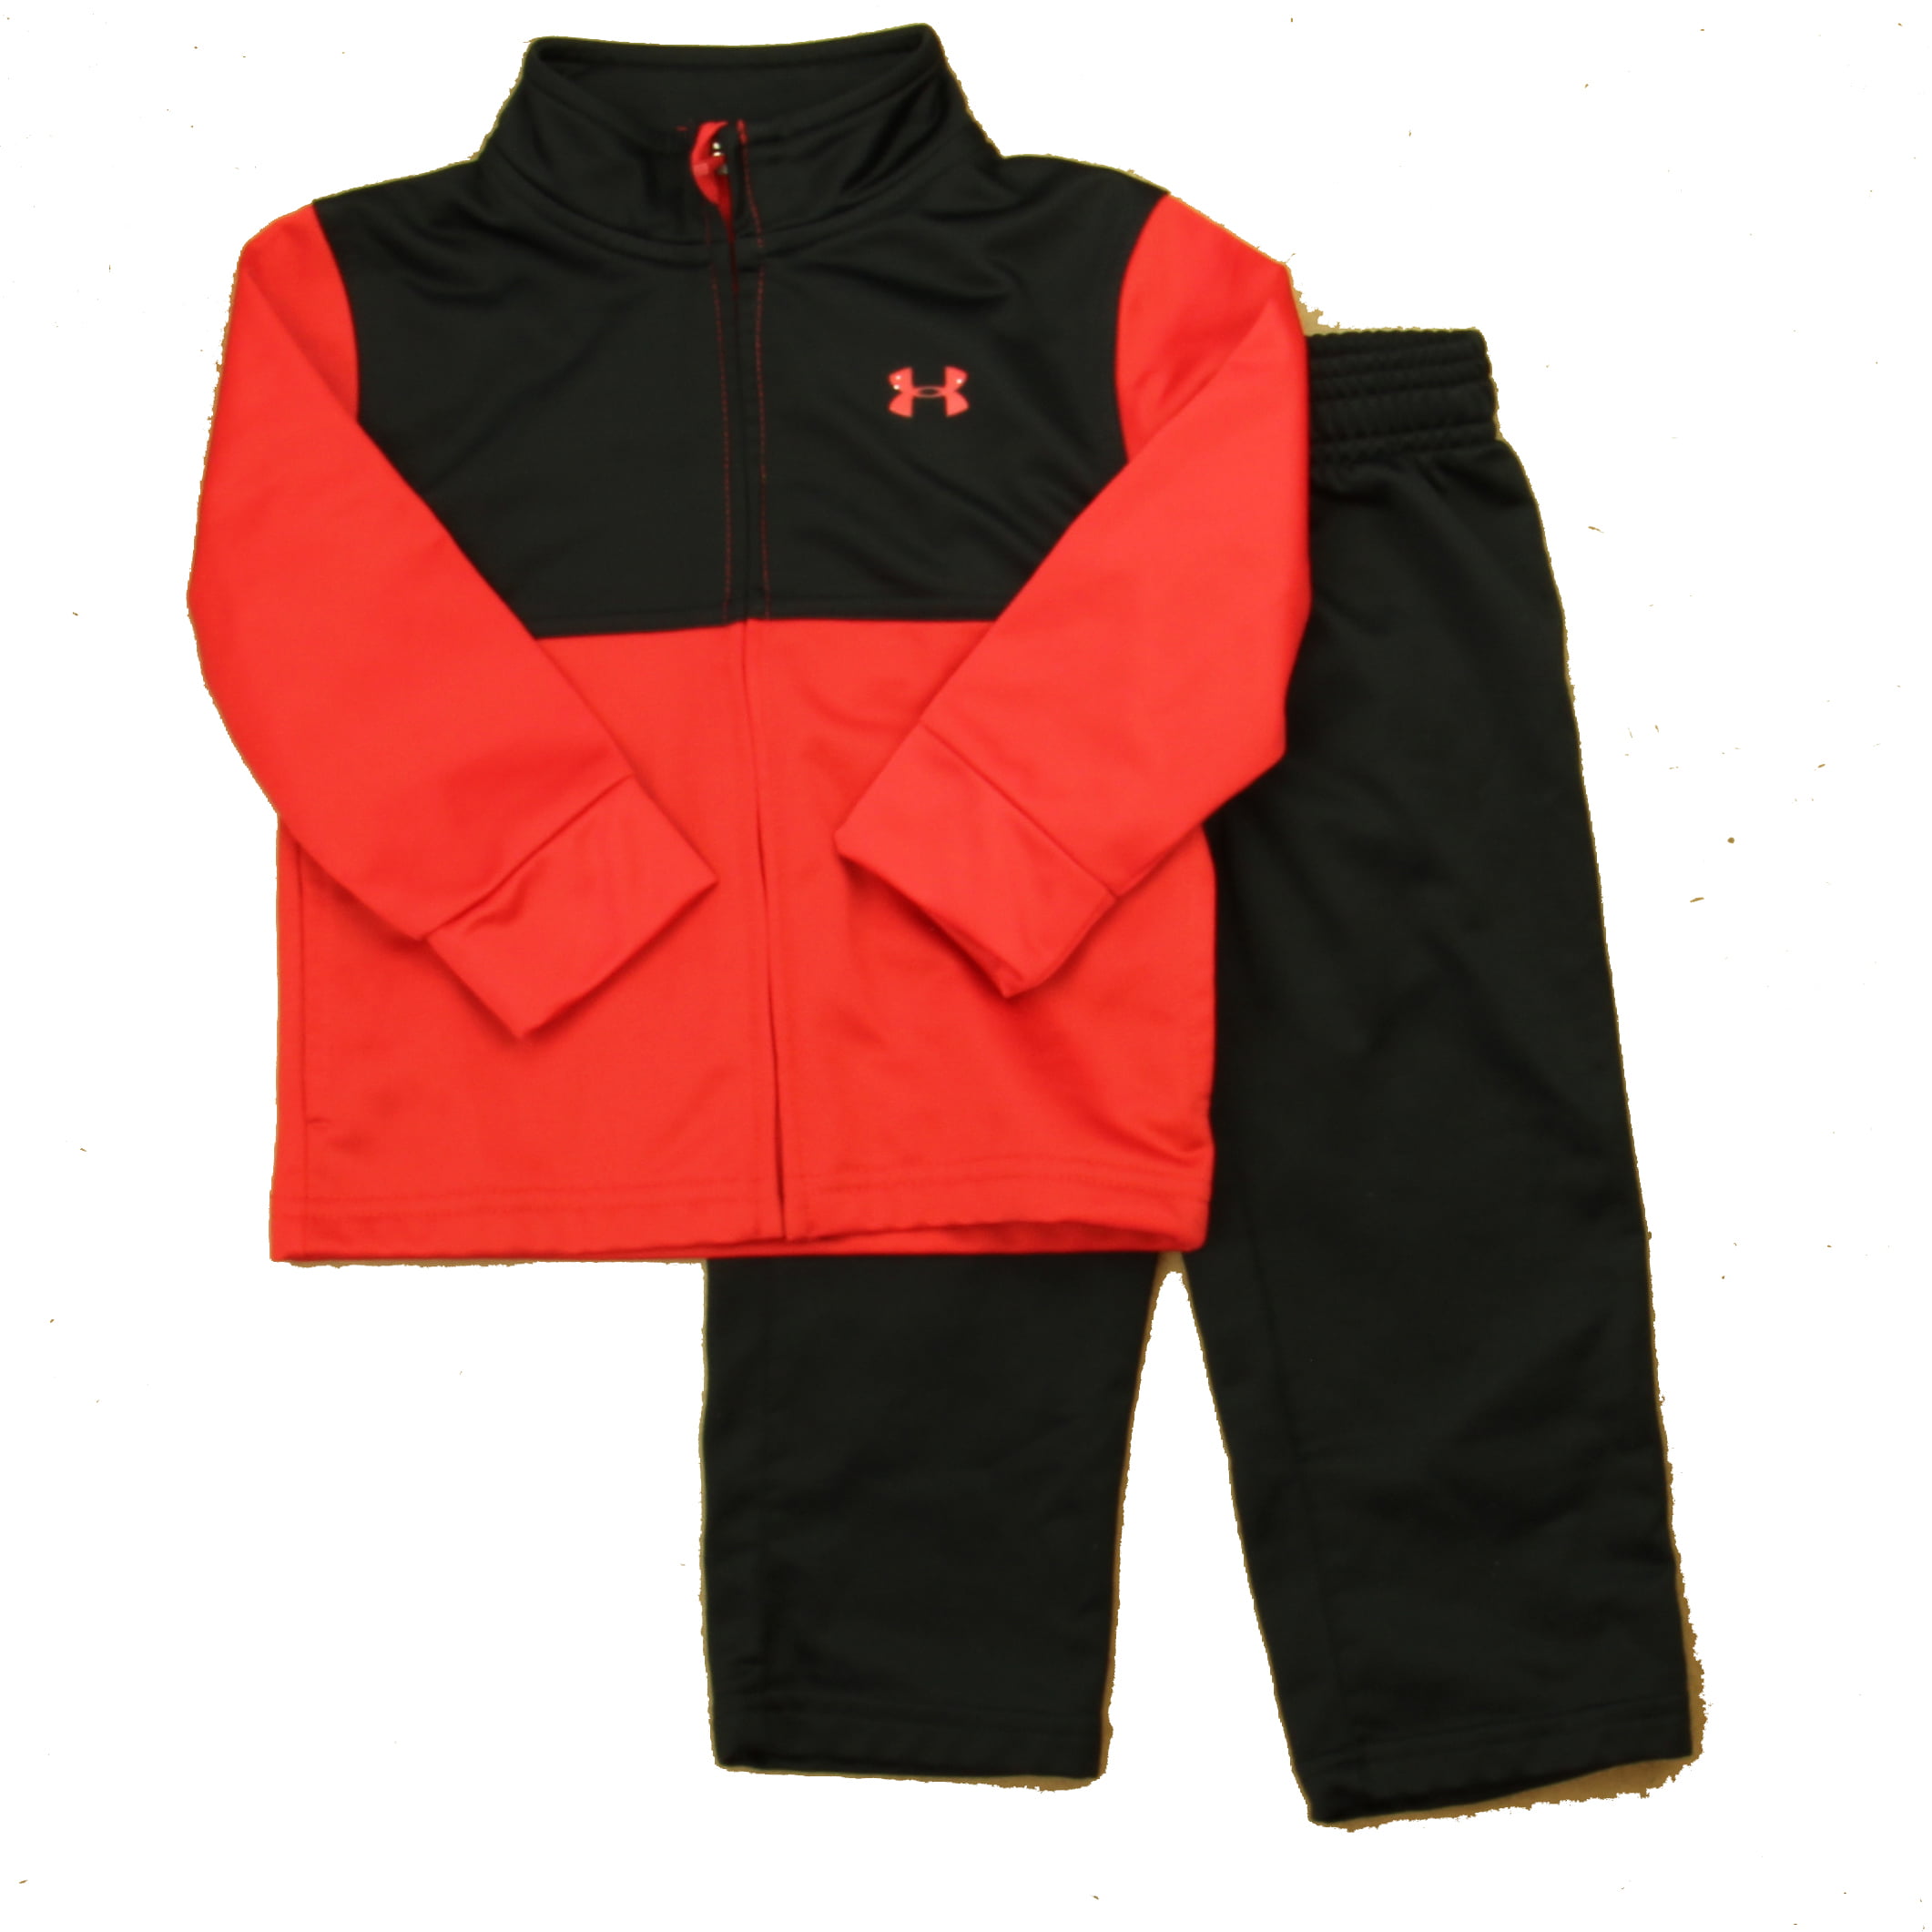 Pre-owned Under Boys Red Black Track Suit size: 18 Months - Walmart.com